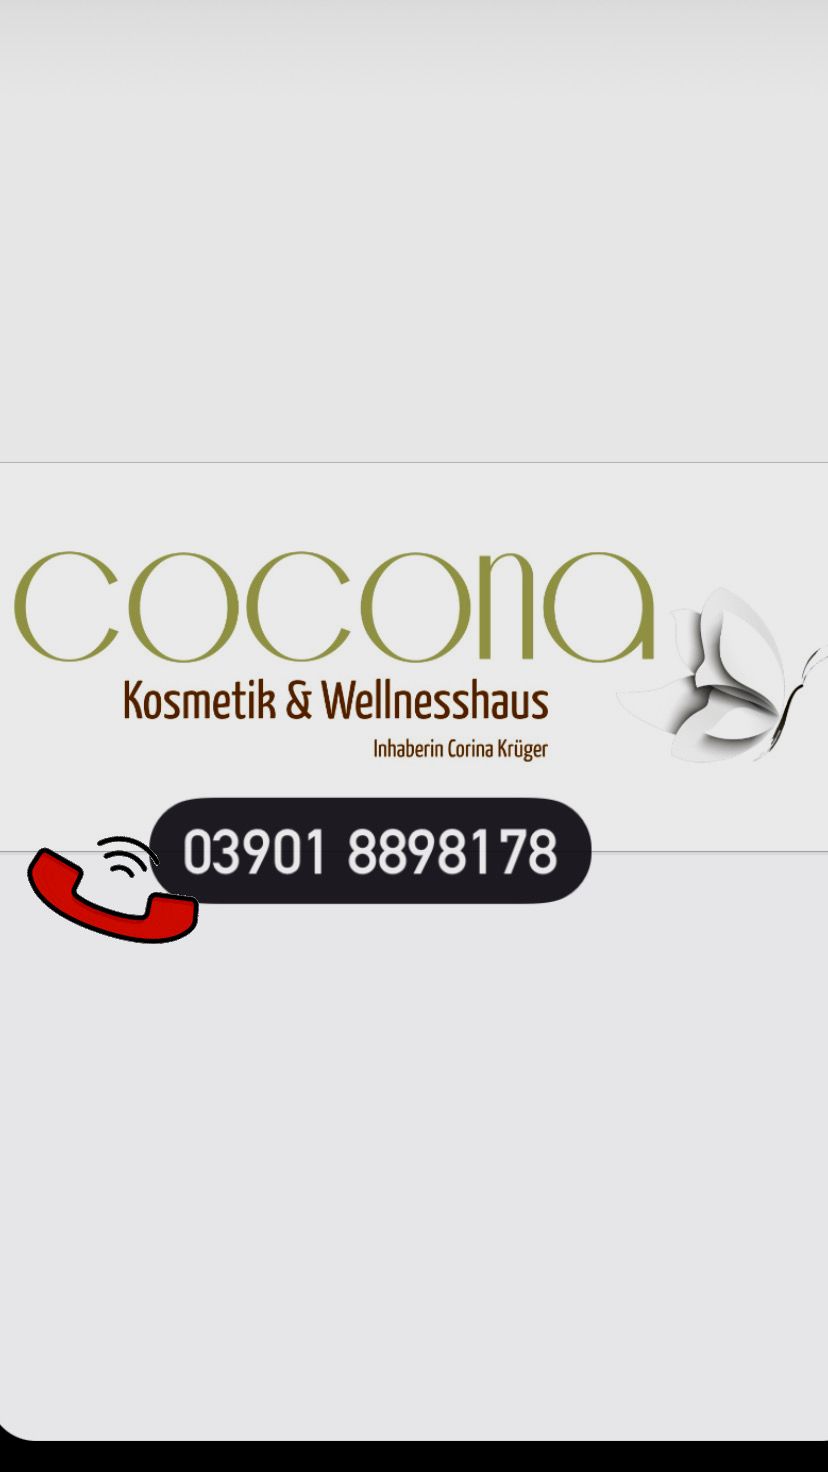 Cocona „Kosmetik& Wellness“